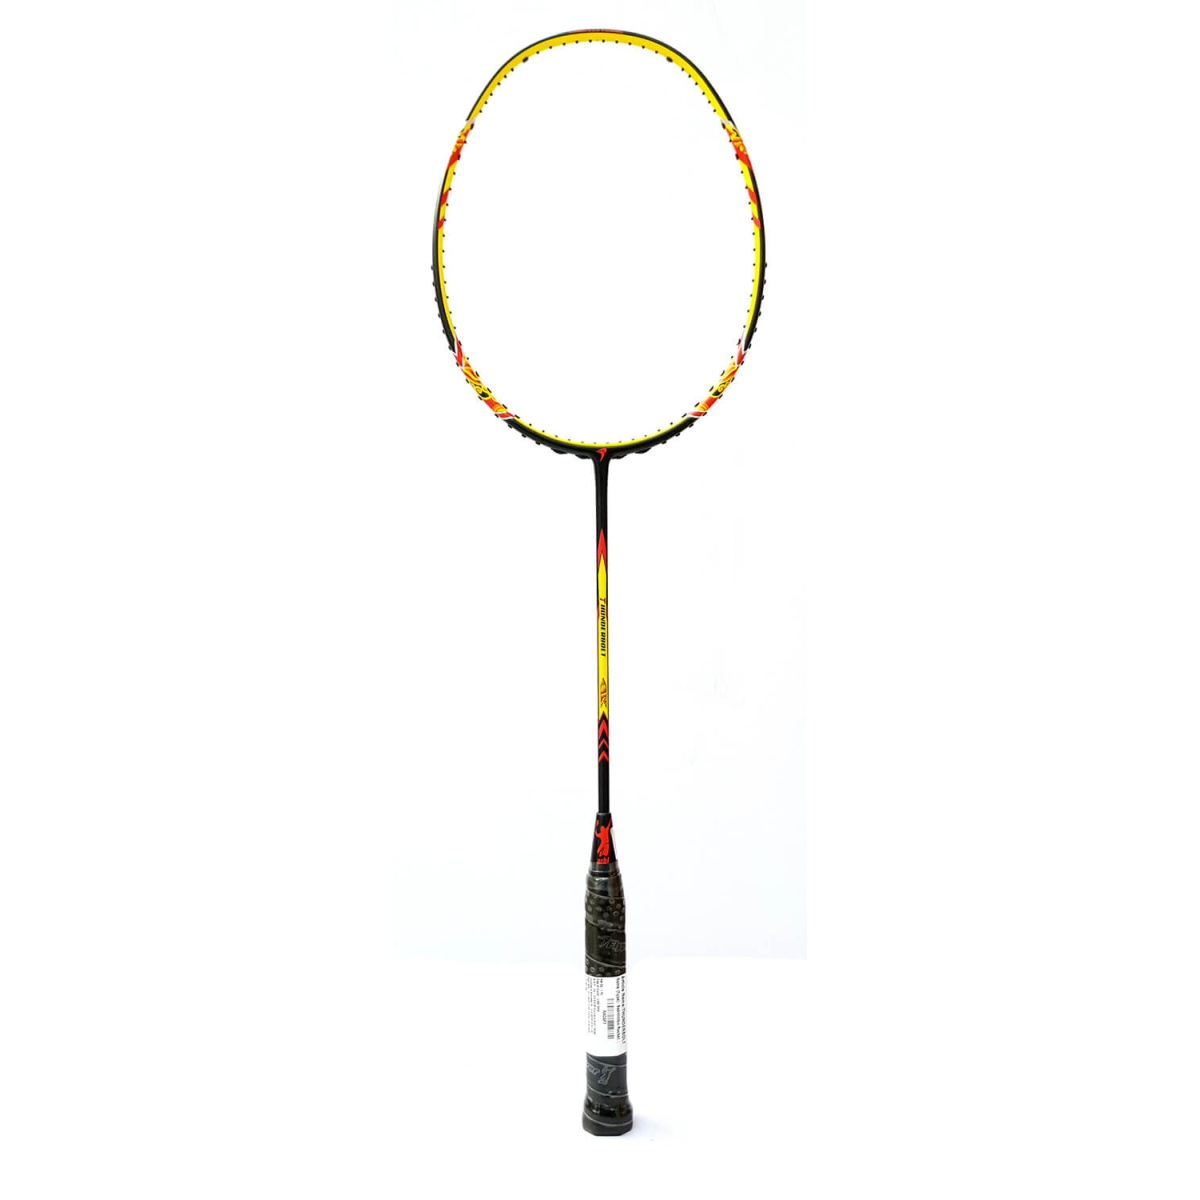 Buy Flypower Thunderbolt Badminton Racket